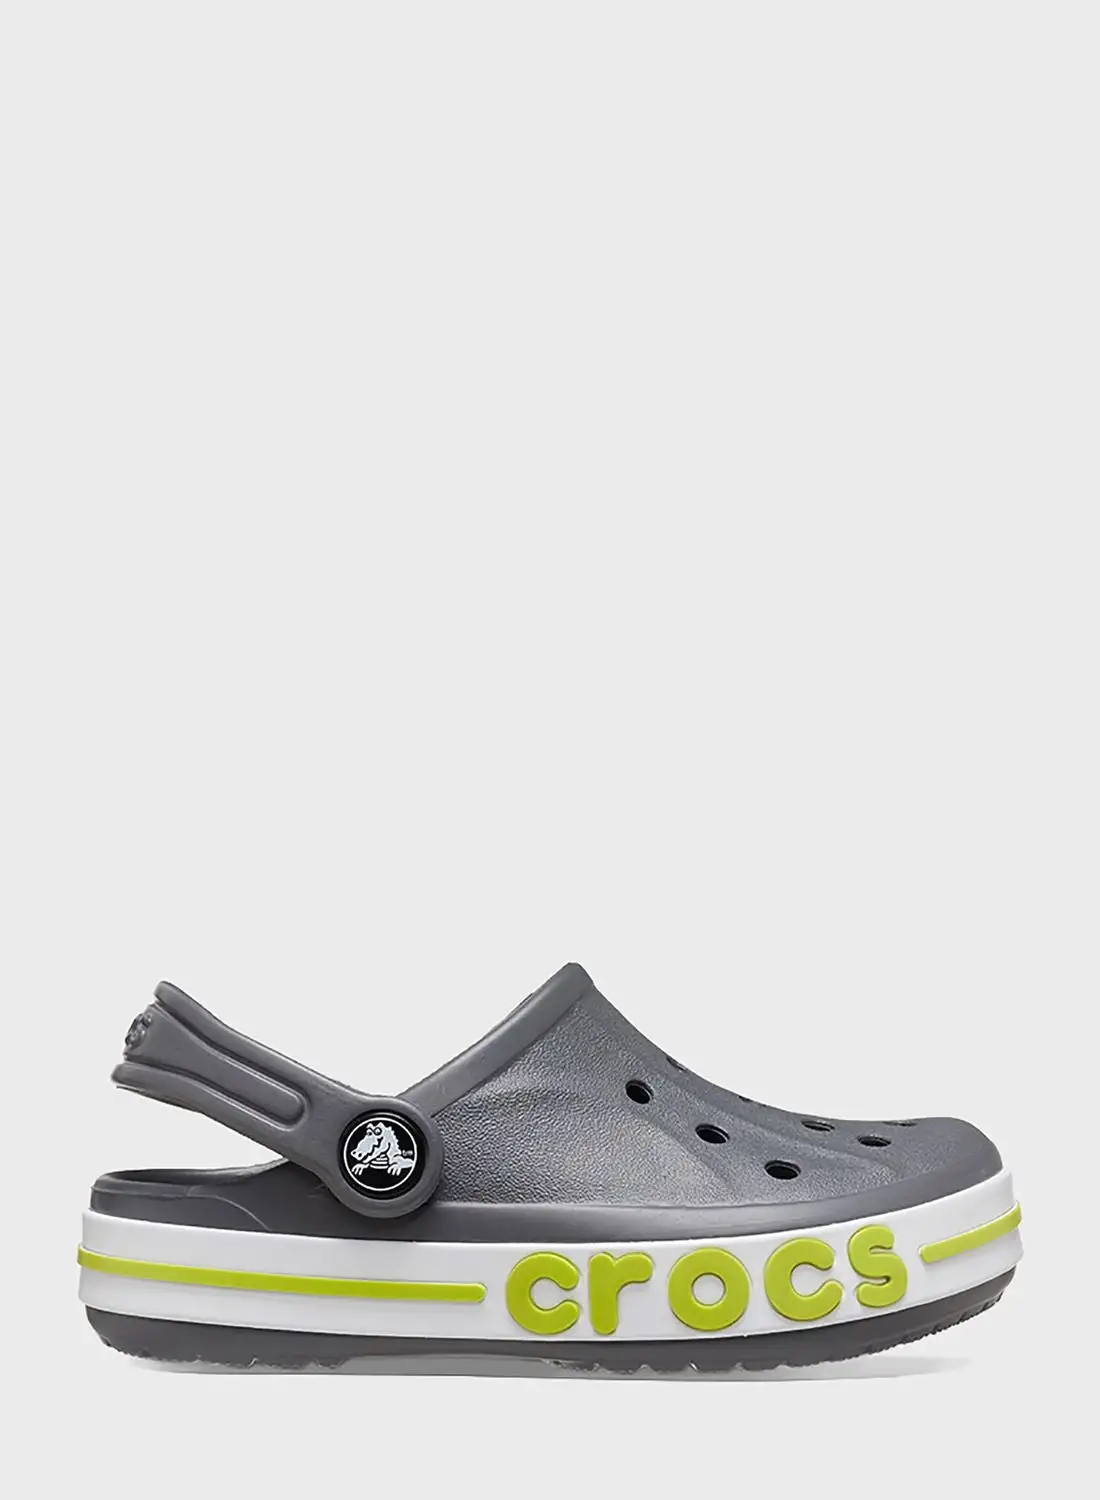 crocs Kids Baya Clog Sandals